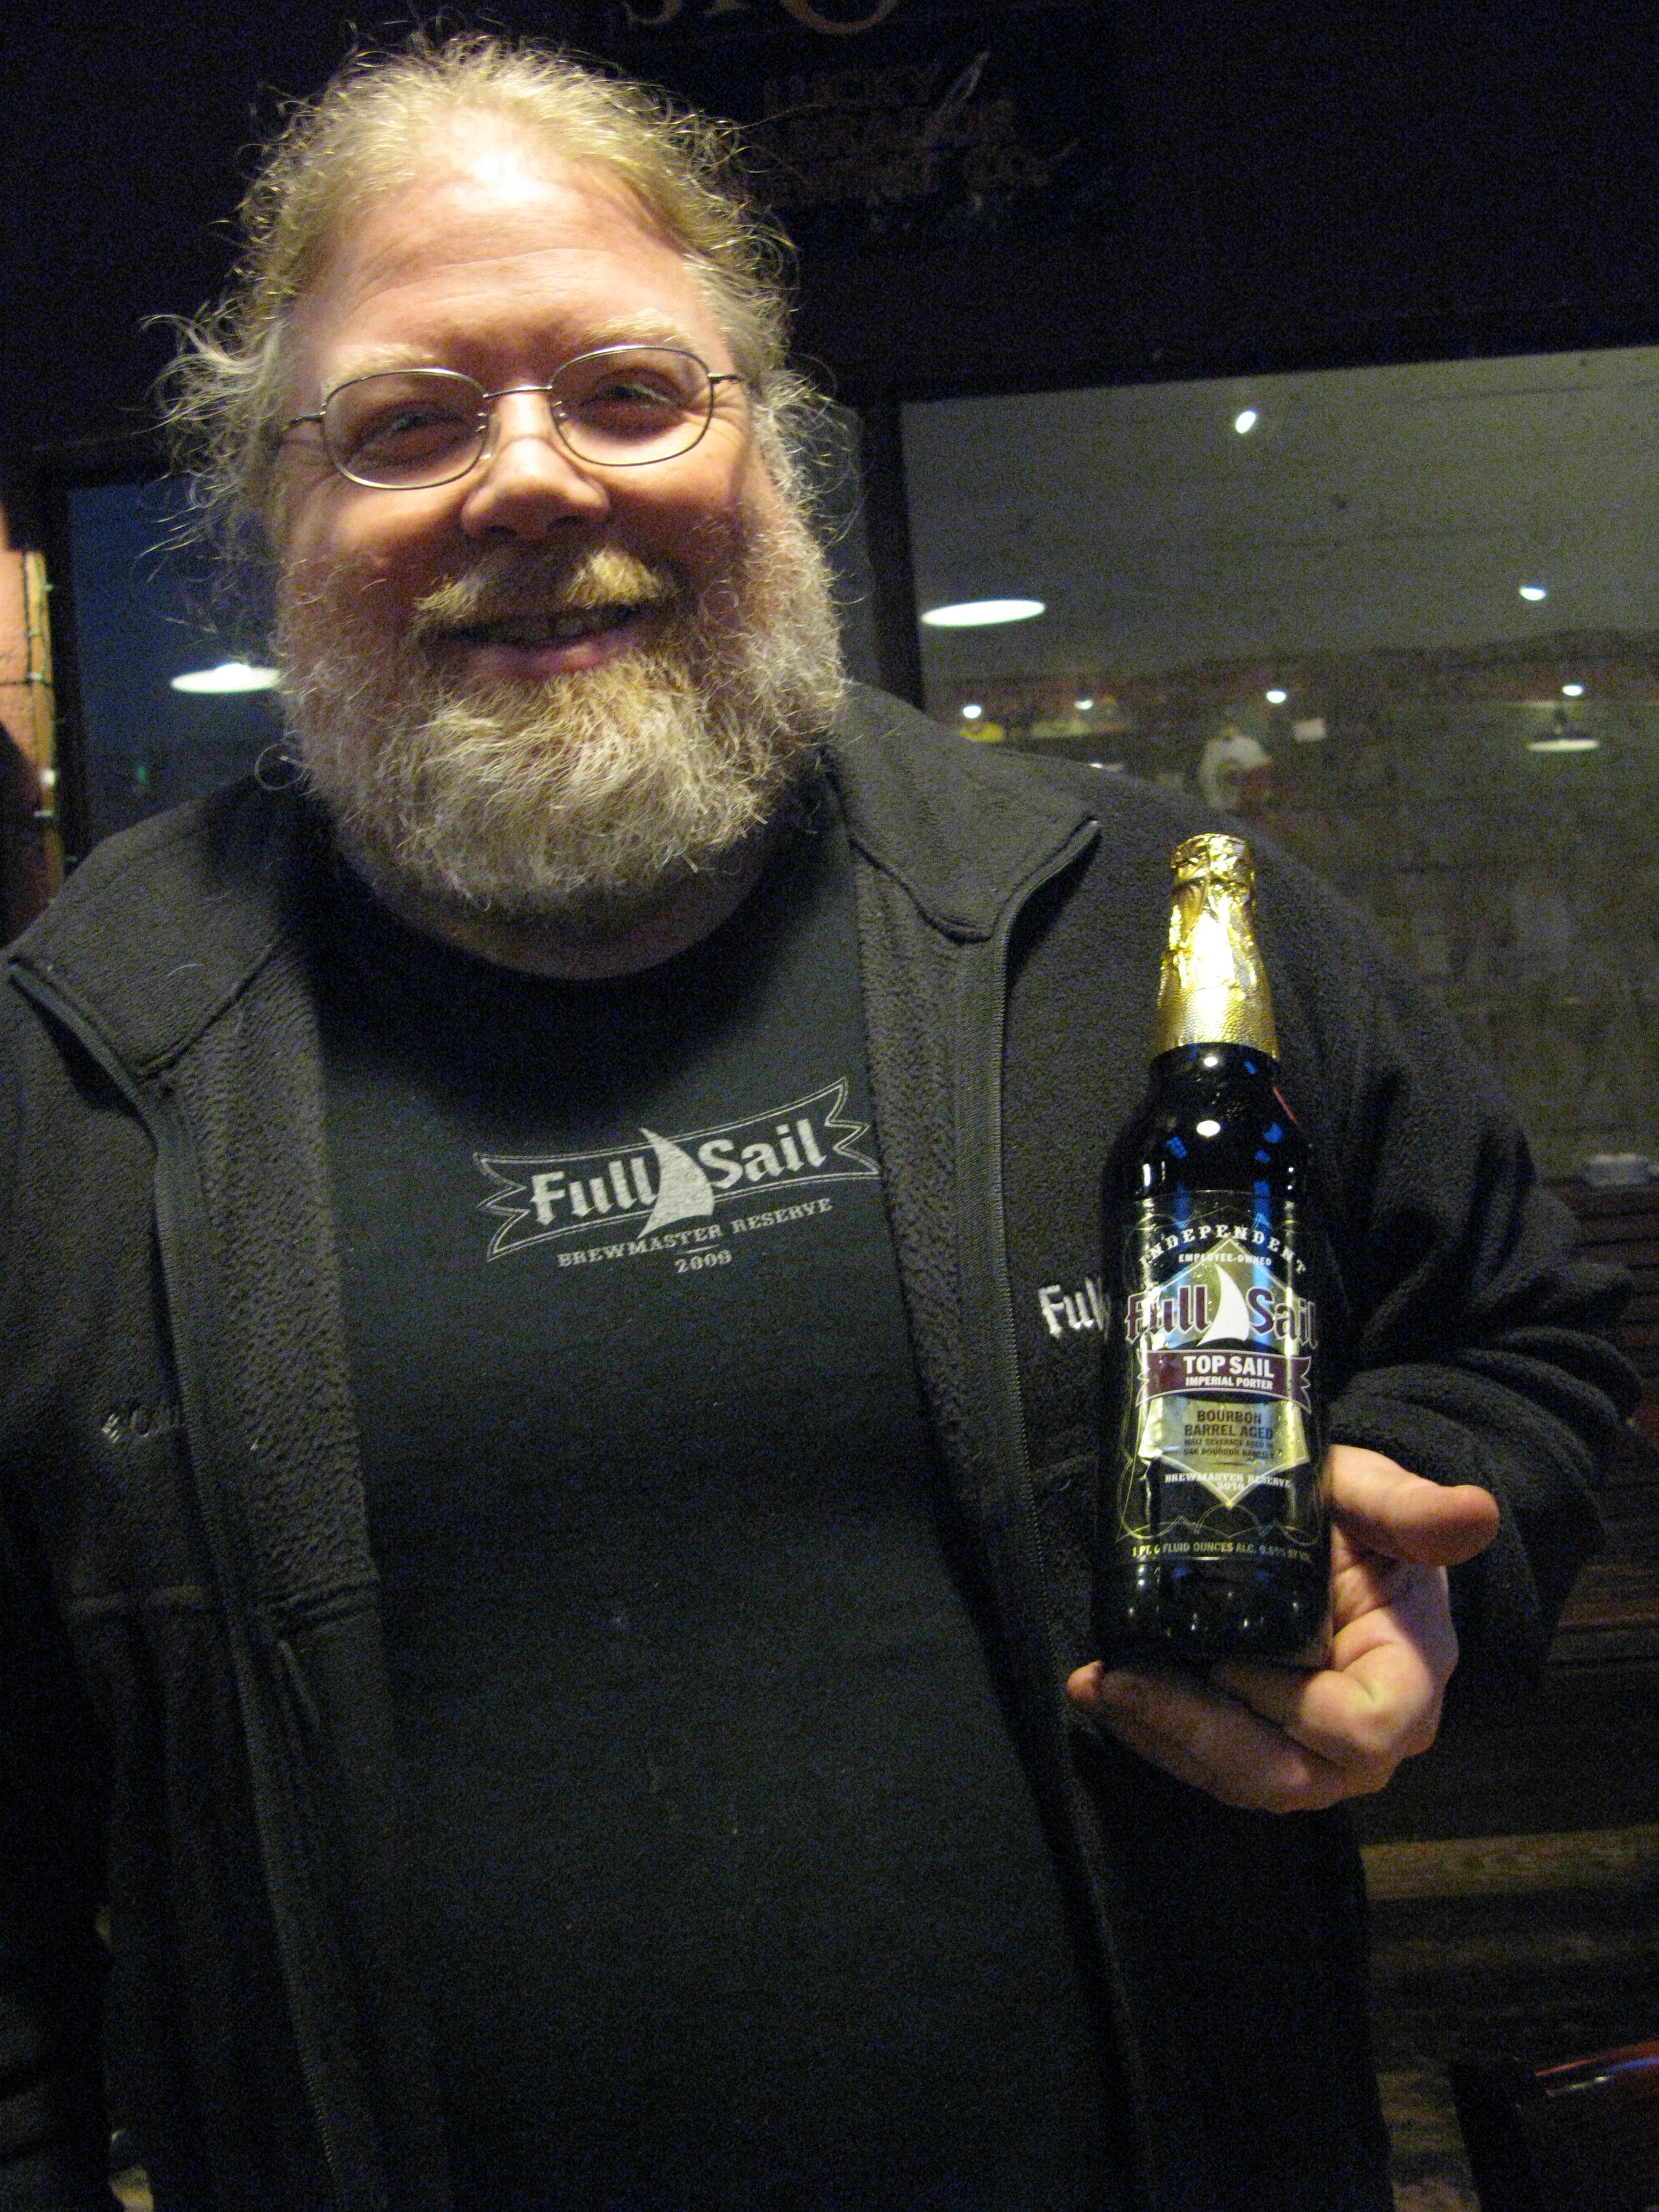 John Harris holding a bottle of Full Sail Top Sail. (FoystonFoto)